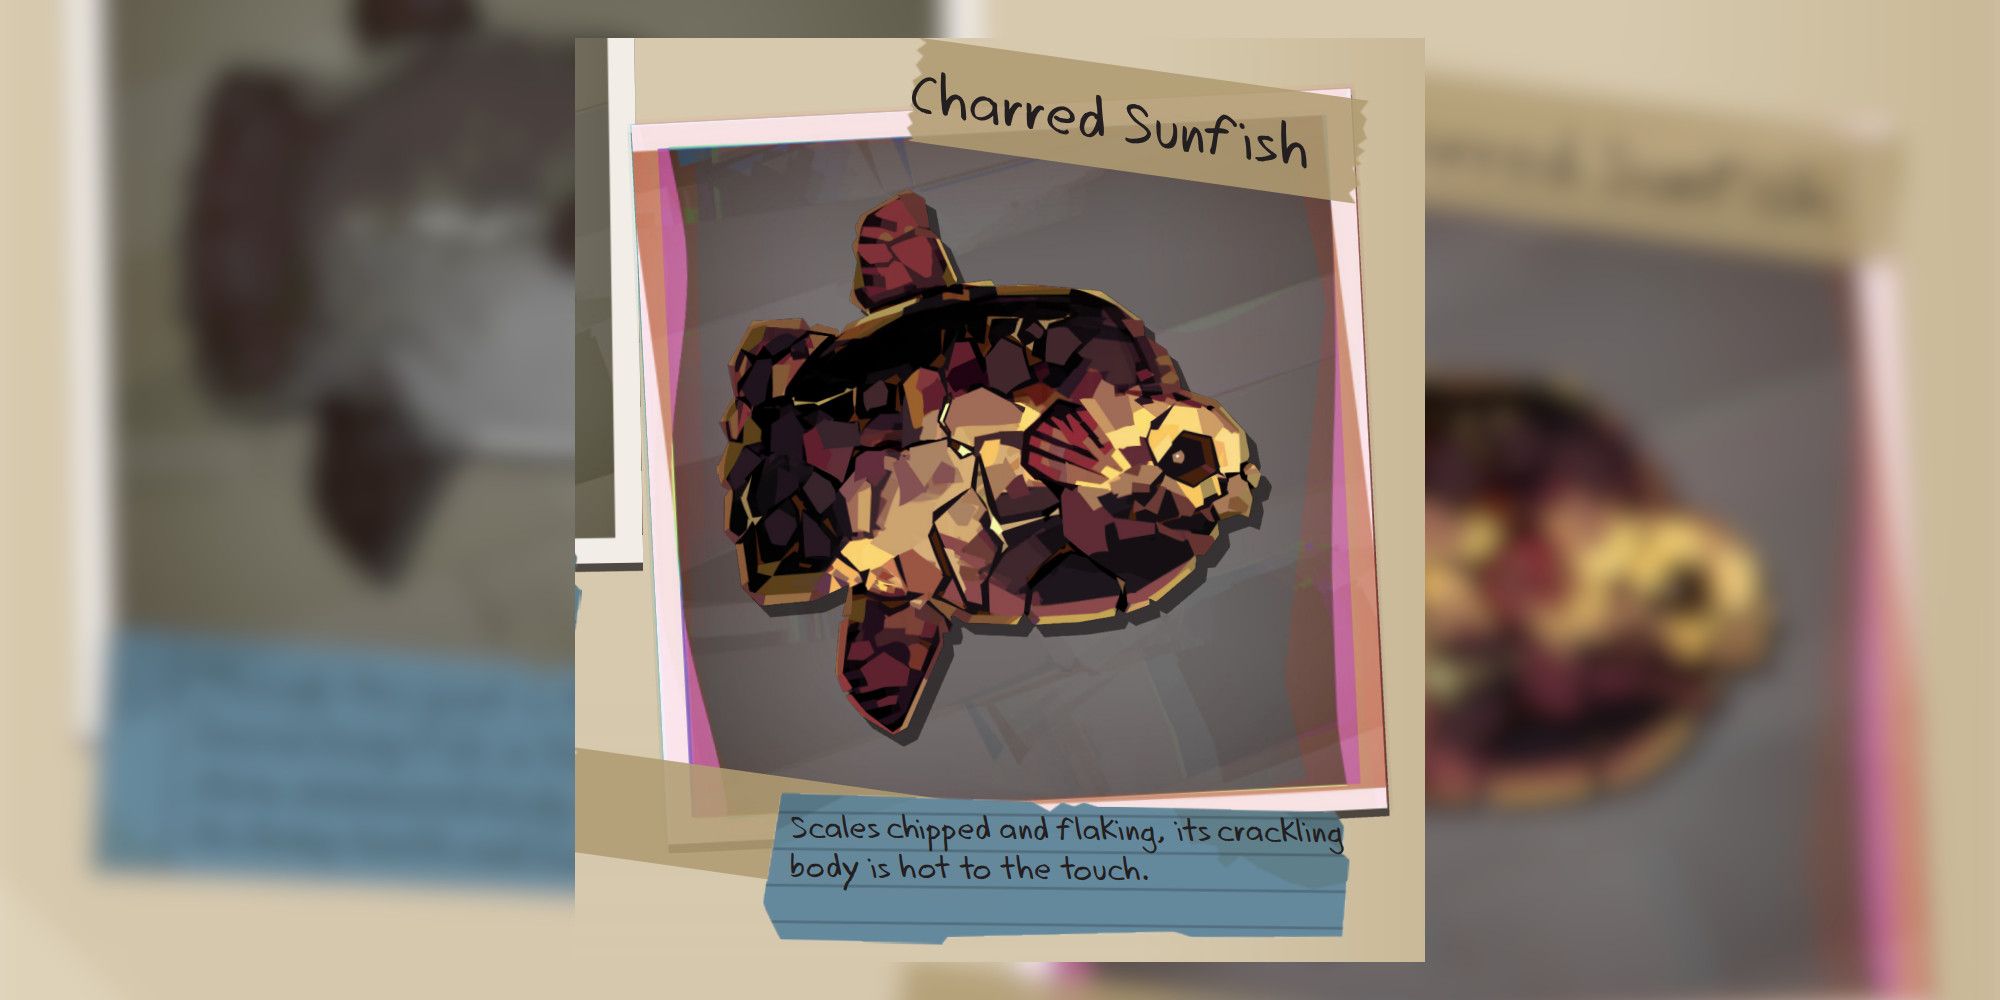 Dredging charred sunfish